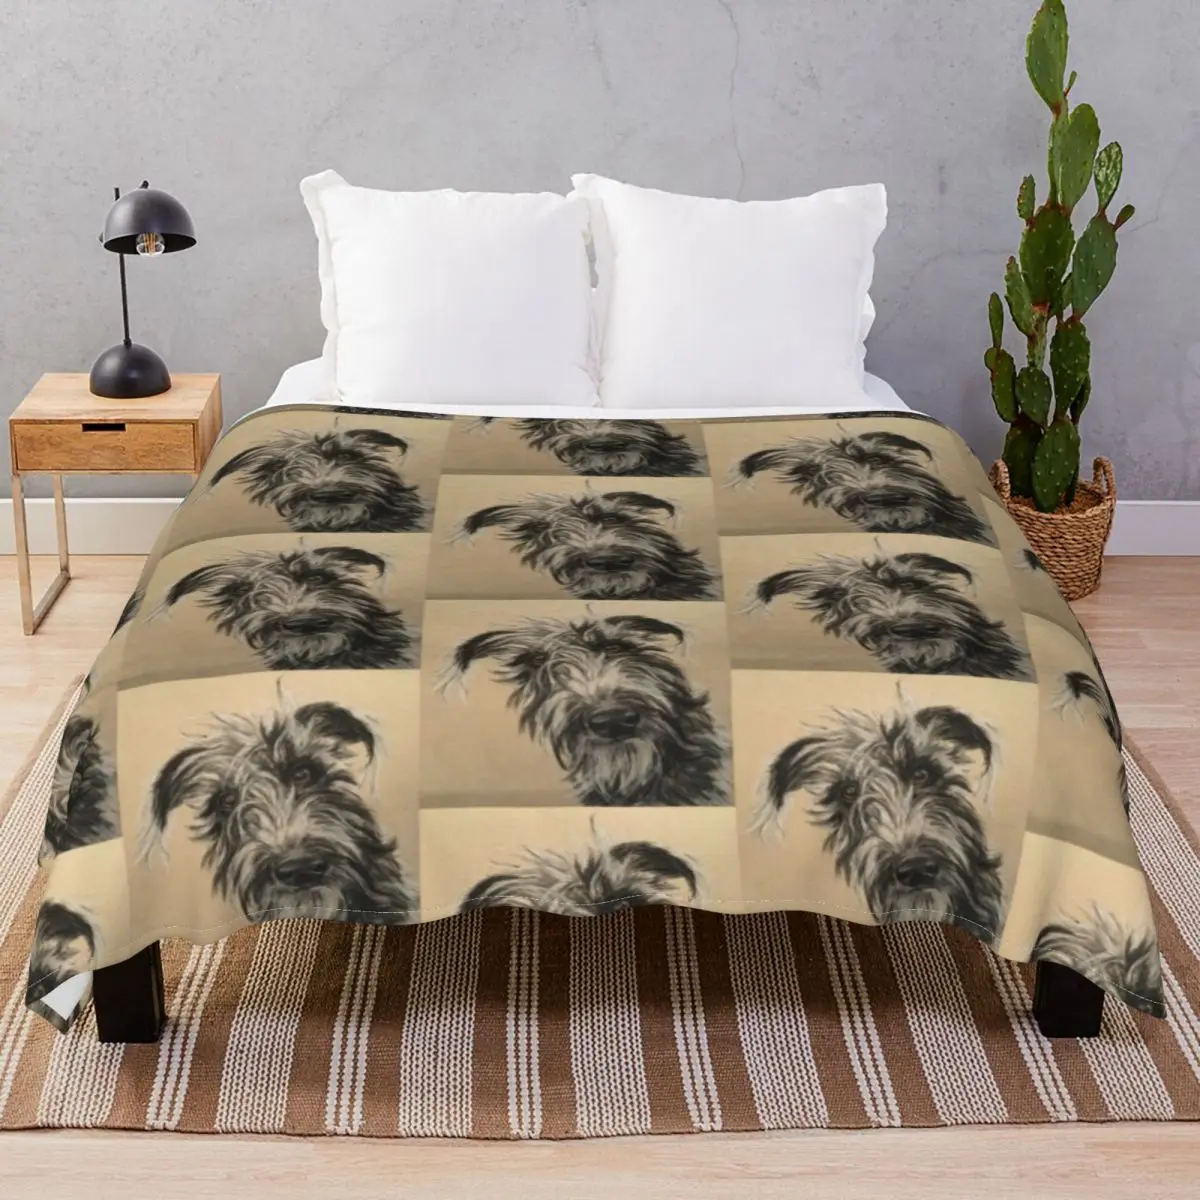 Scruffy Beddywhippet Lurcher Blankets Flannel Autumn/Winter Comfortable Unisex Throw Blanket for Bed Sofa Travel Cinema